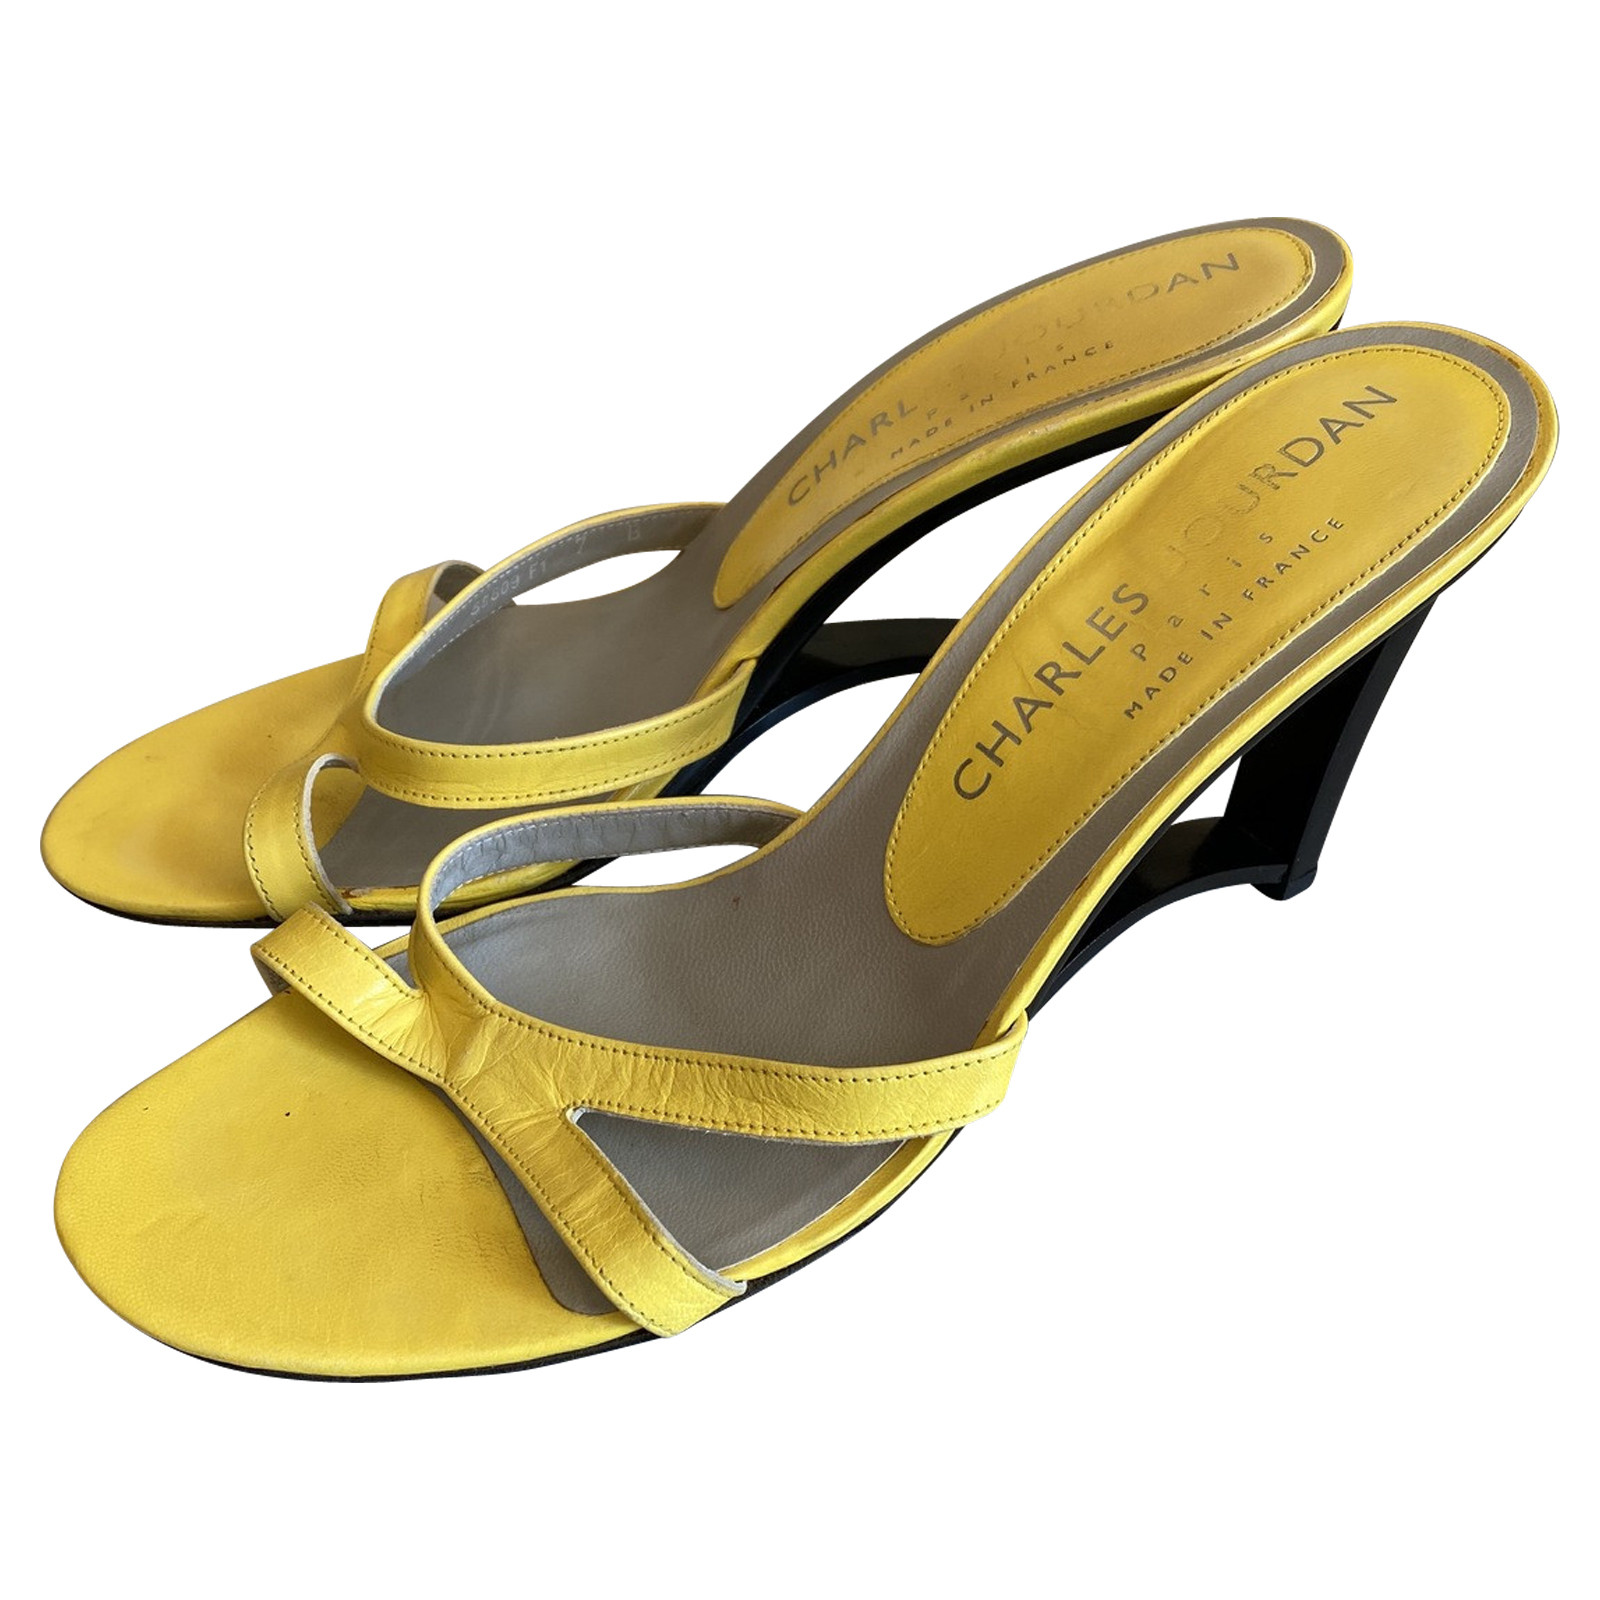 CHARLES JOURDAN Women's Sandals Leather in Yellow